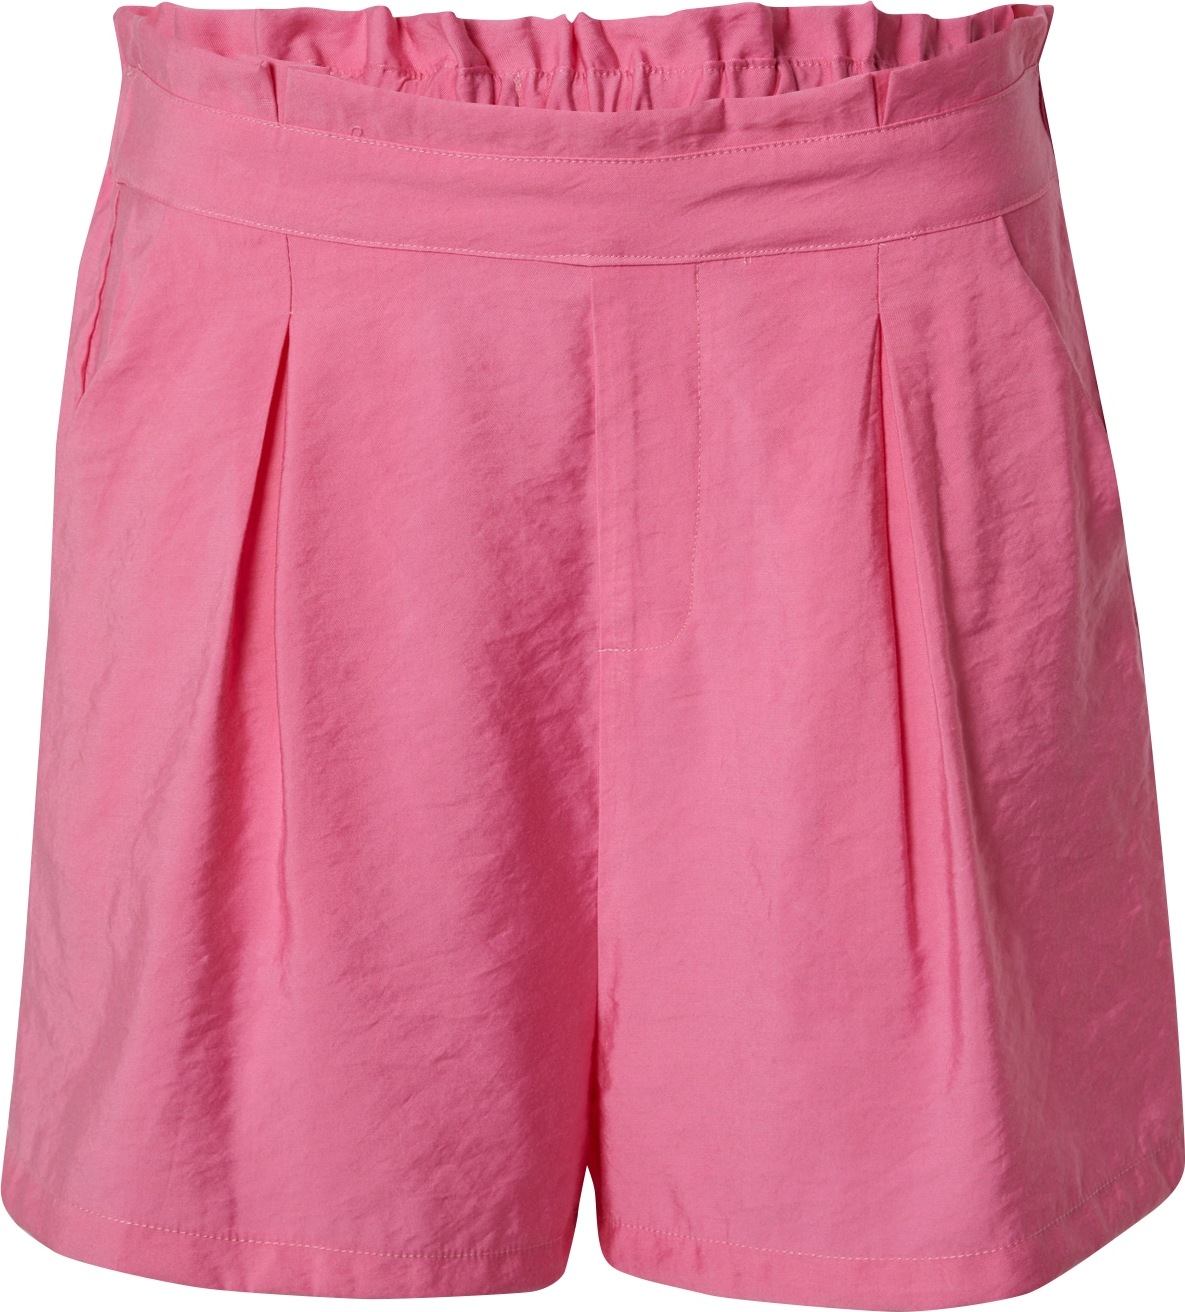 SISTERS POINT Kalhoty se sklady v pase 'ELLA' pink